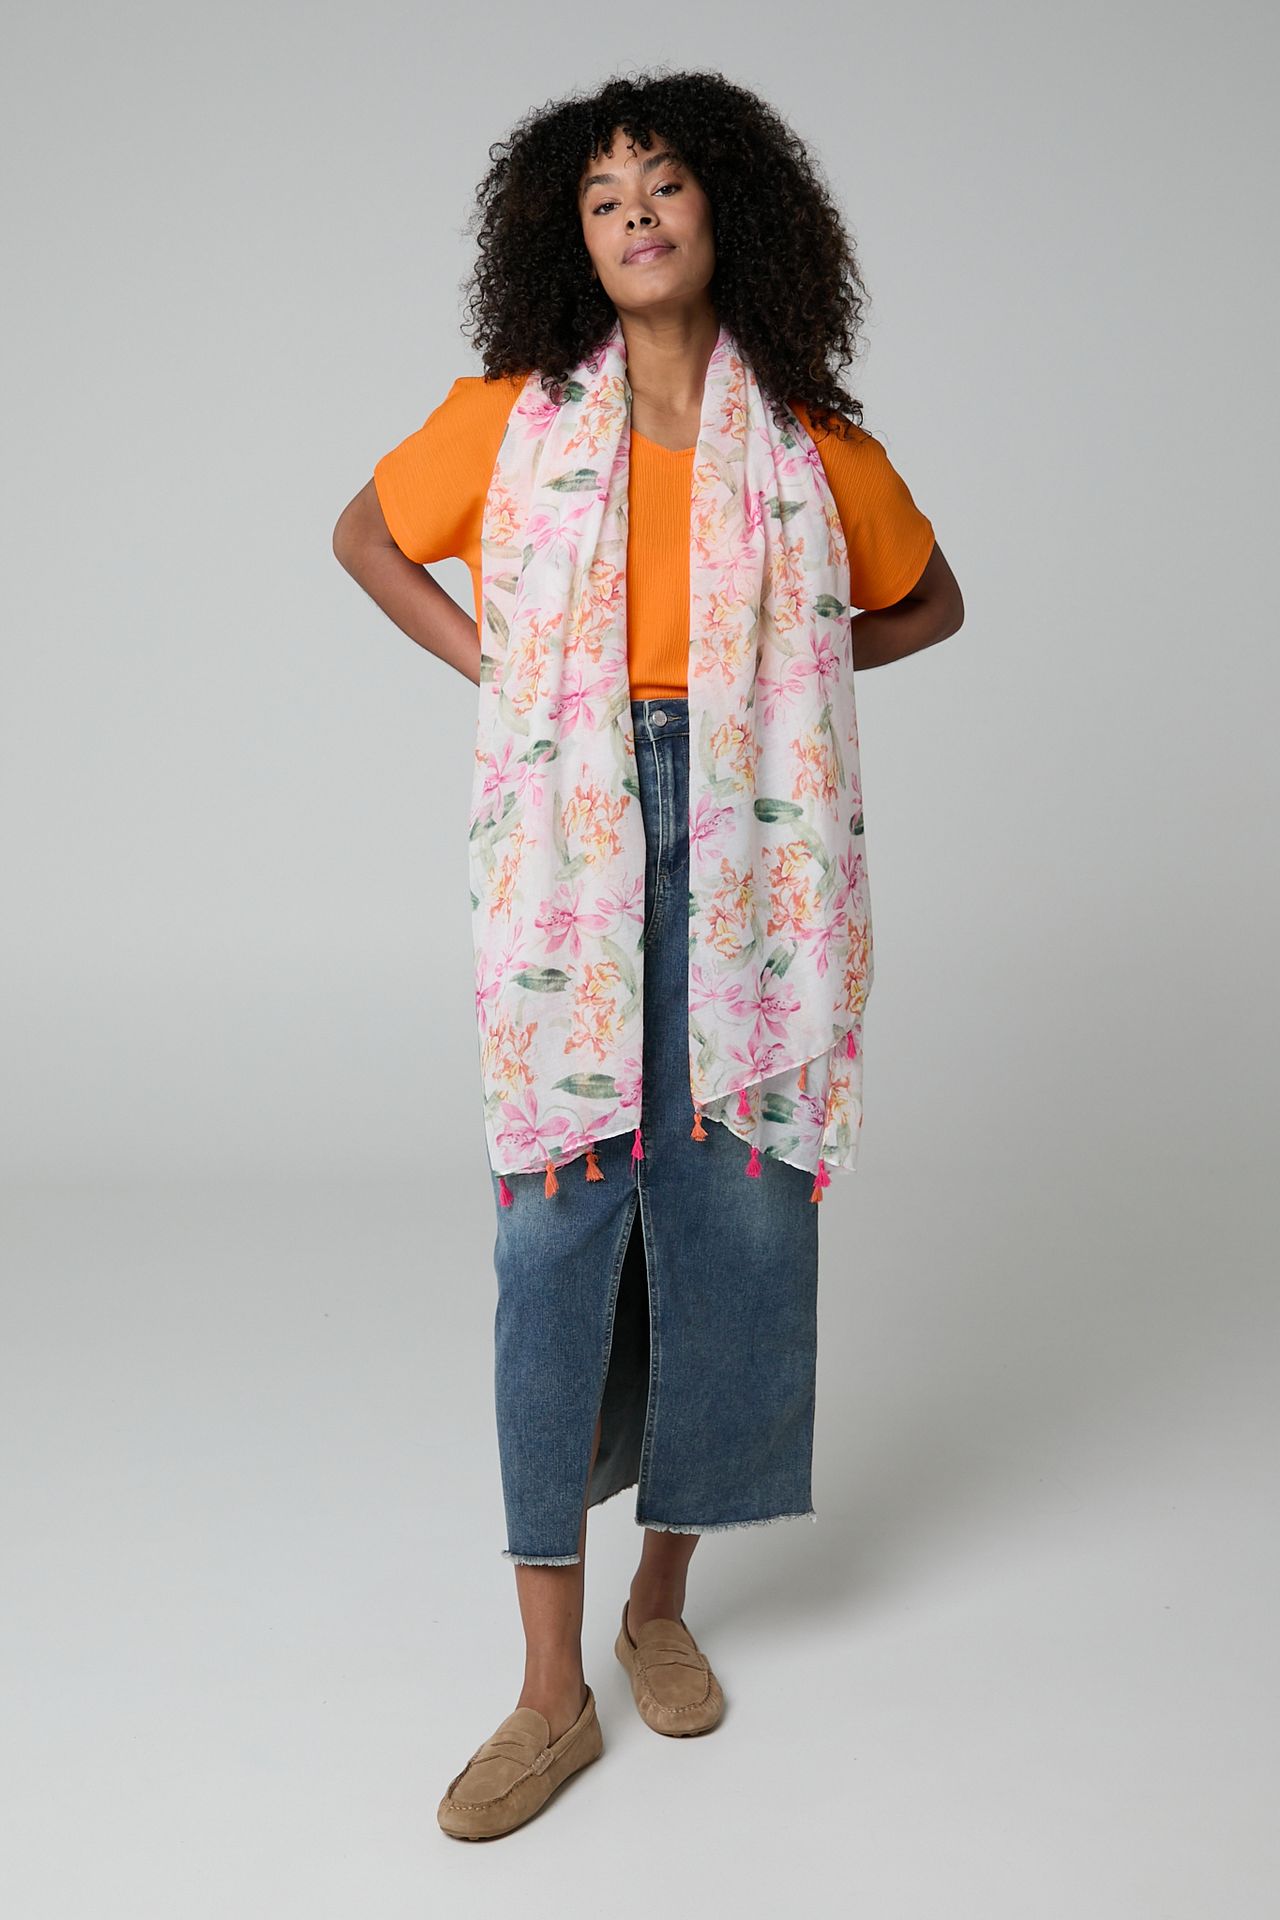 Norah Roze sjaal pink multicolor 213590-920